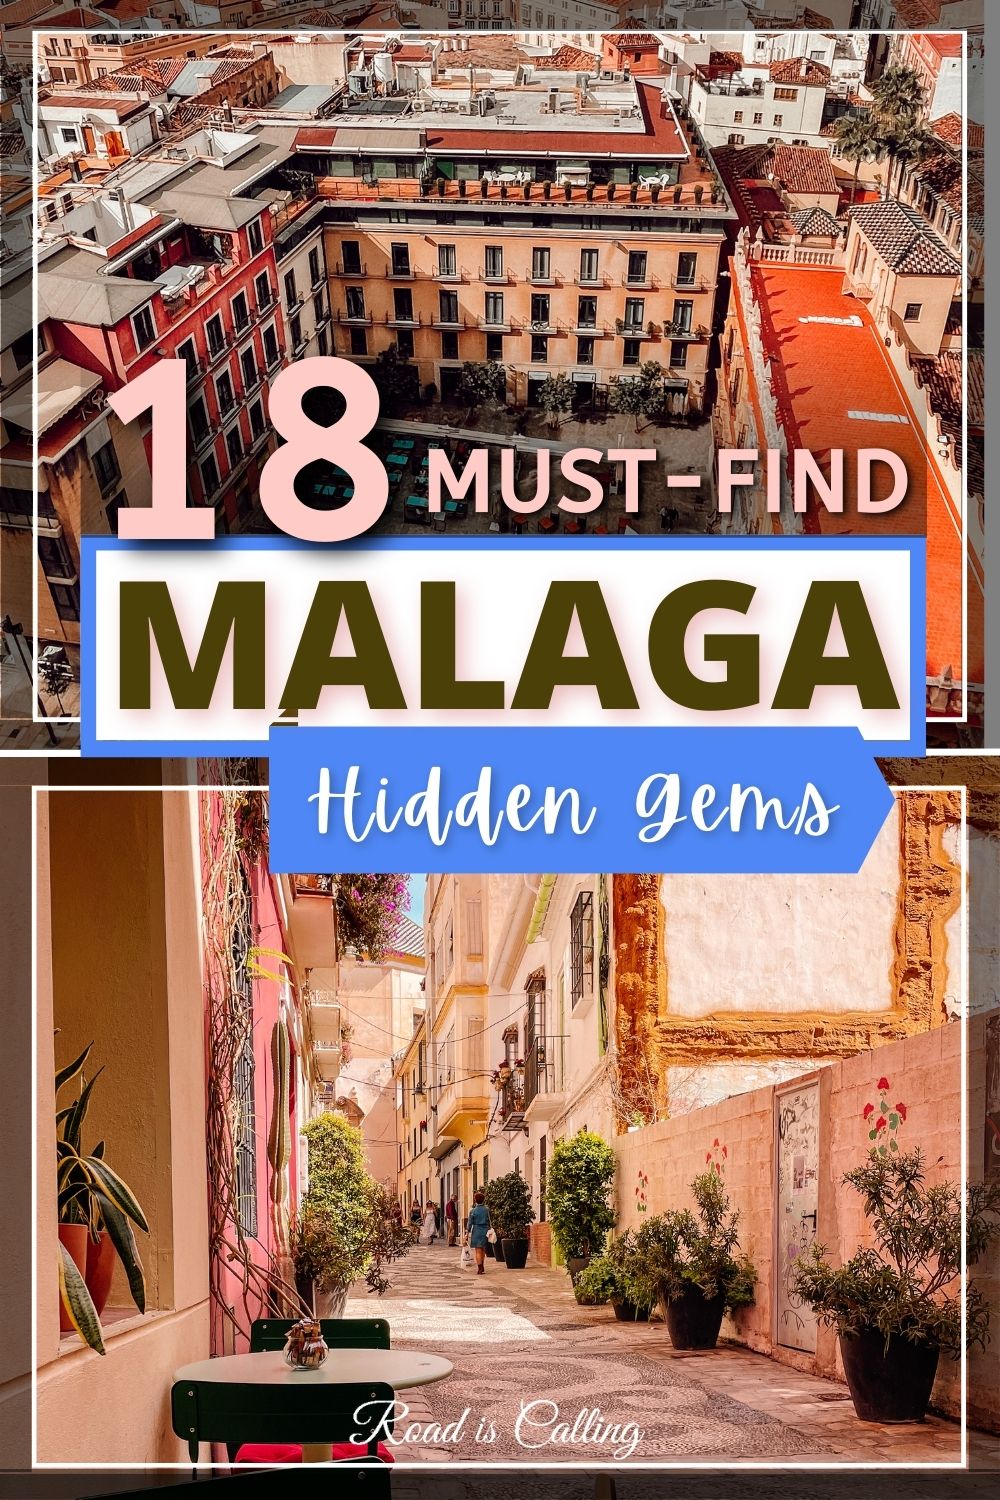 Malaga hidden gems & secret places